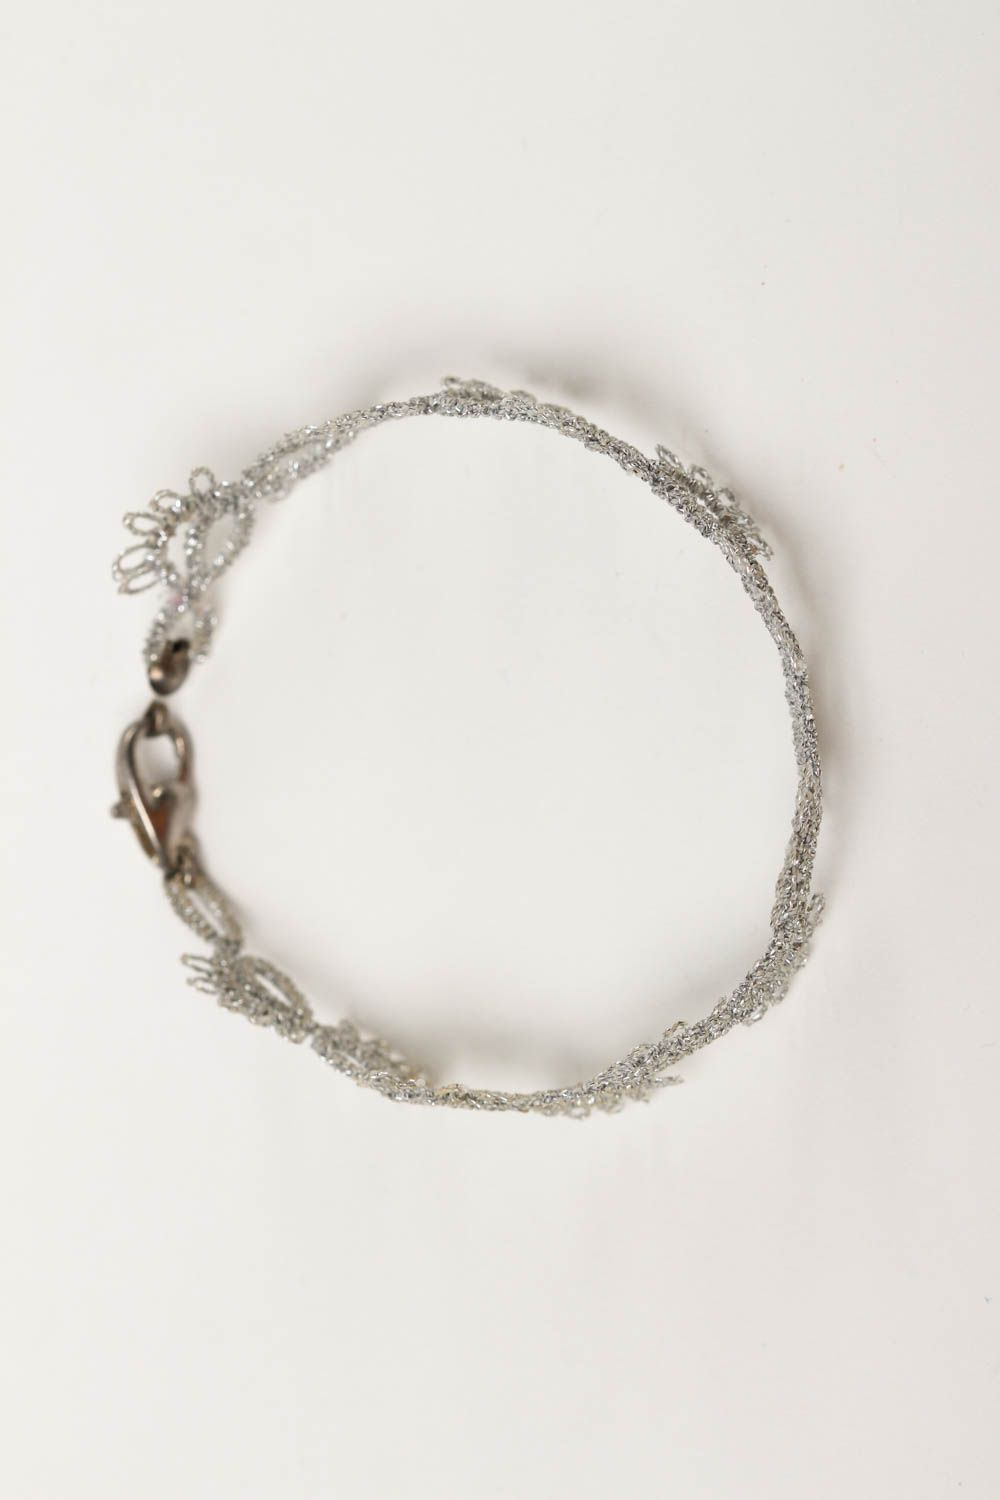 Beautiful handmade woven bracelet wrist bracelet designs textile jewelry photo 2